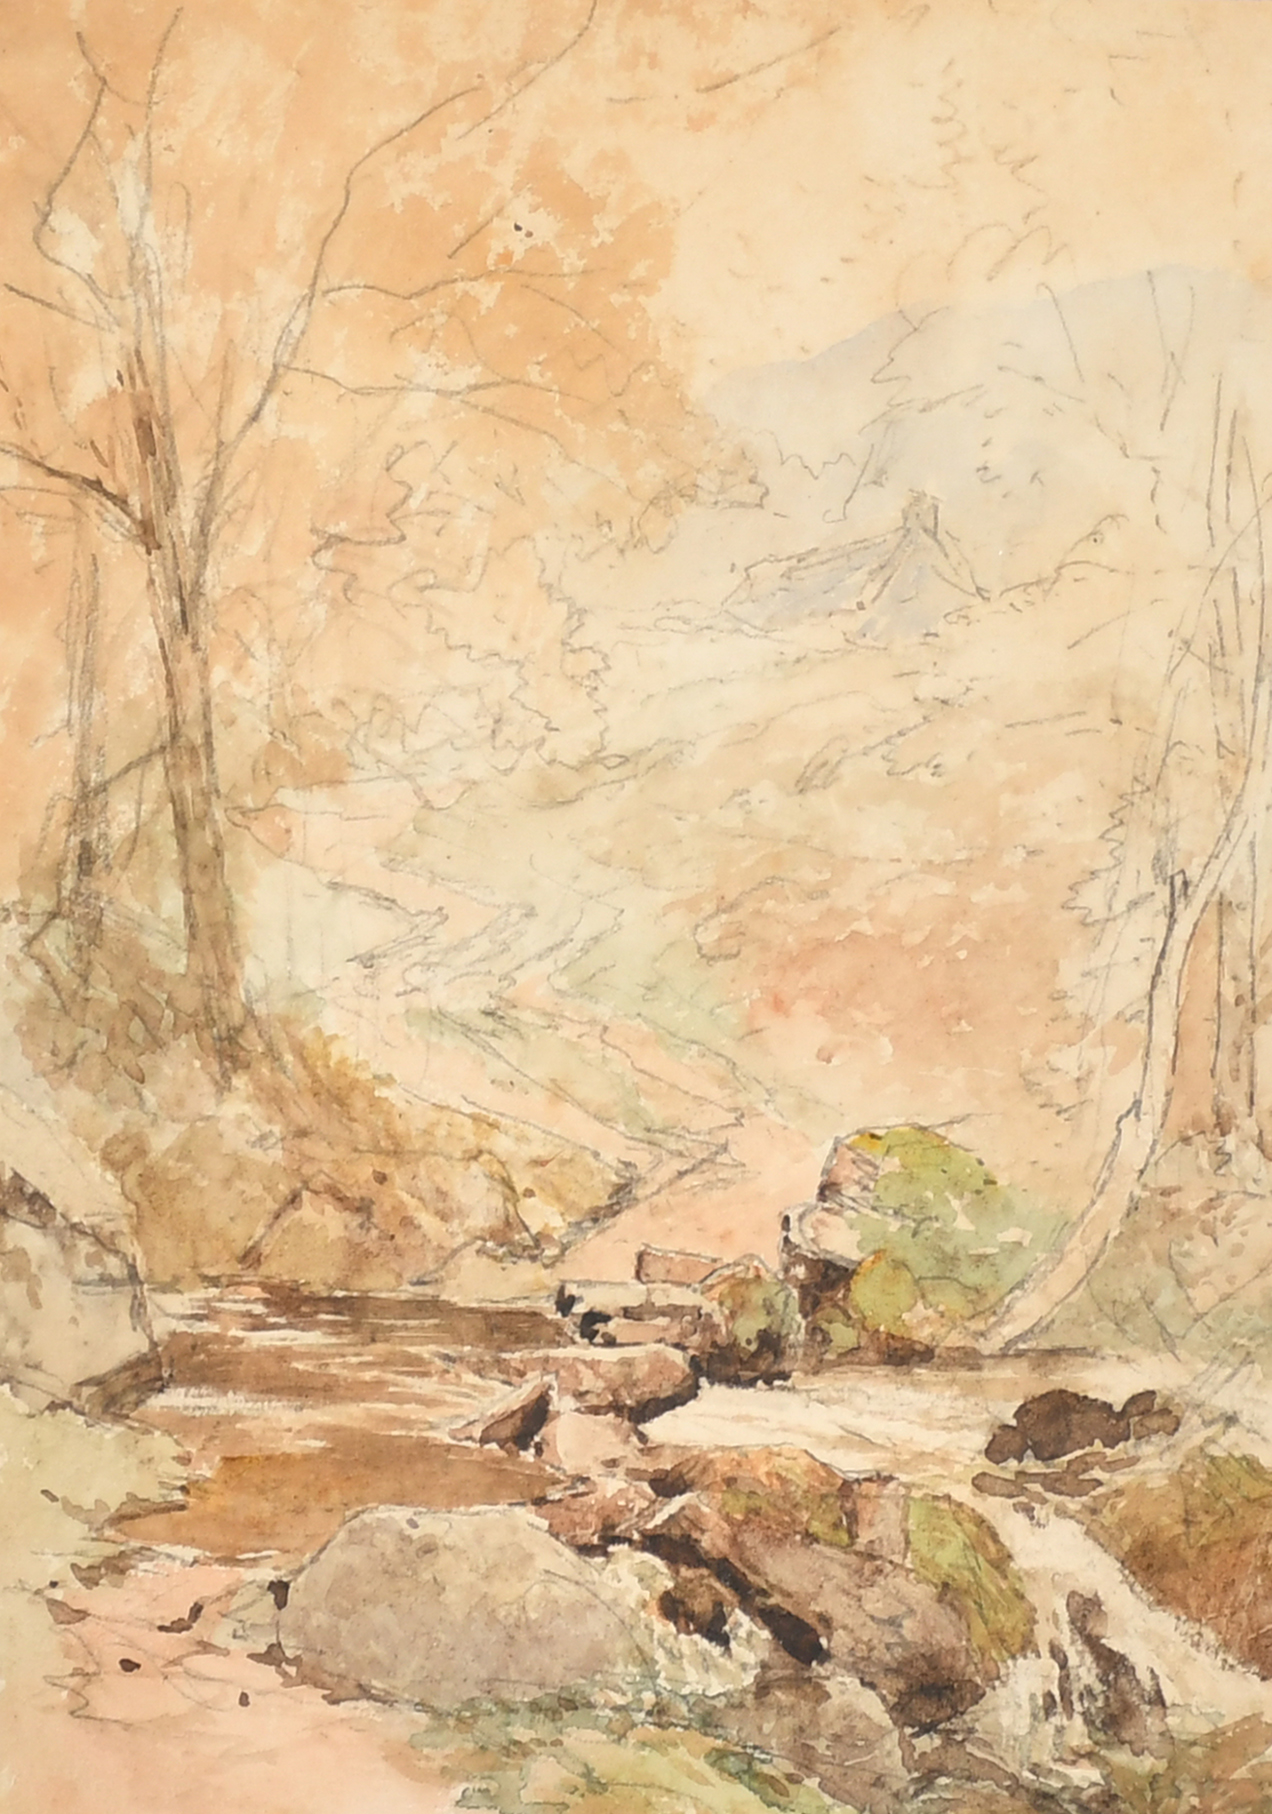 19th Century English School. A Rocky River Landscape, Watercolour and pencil sketch, 9" x 6.5" (22.8